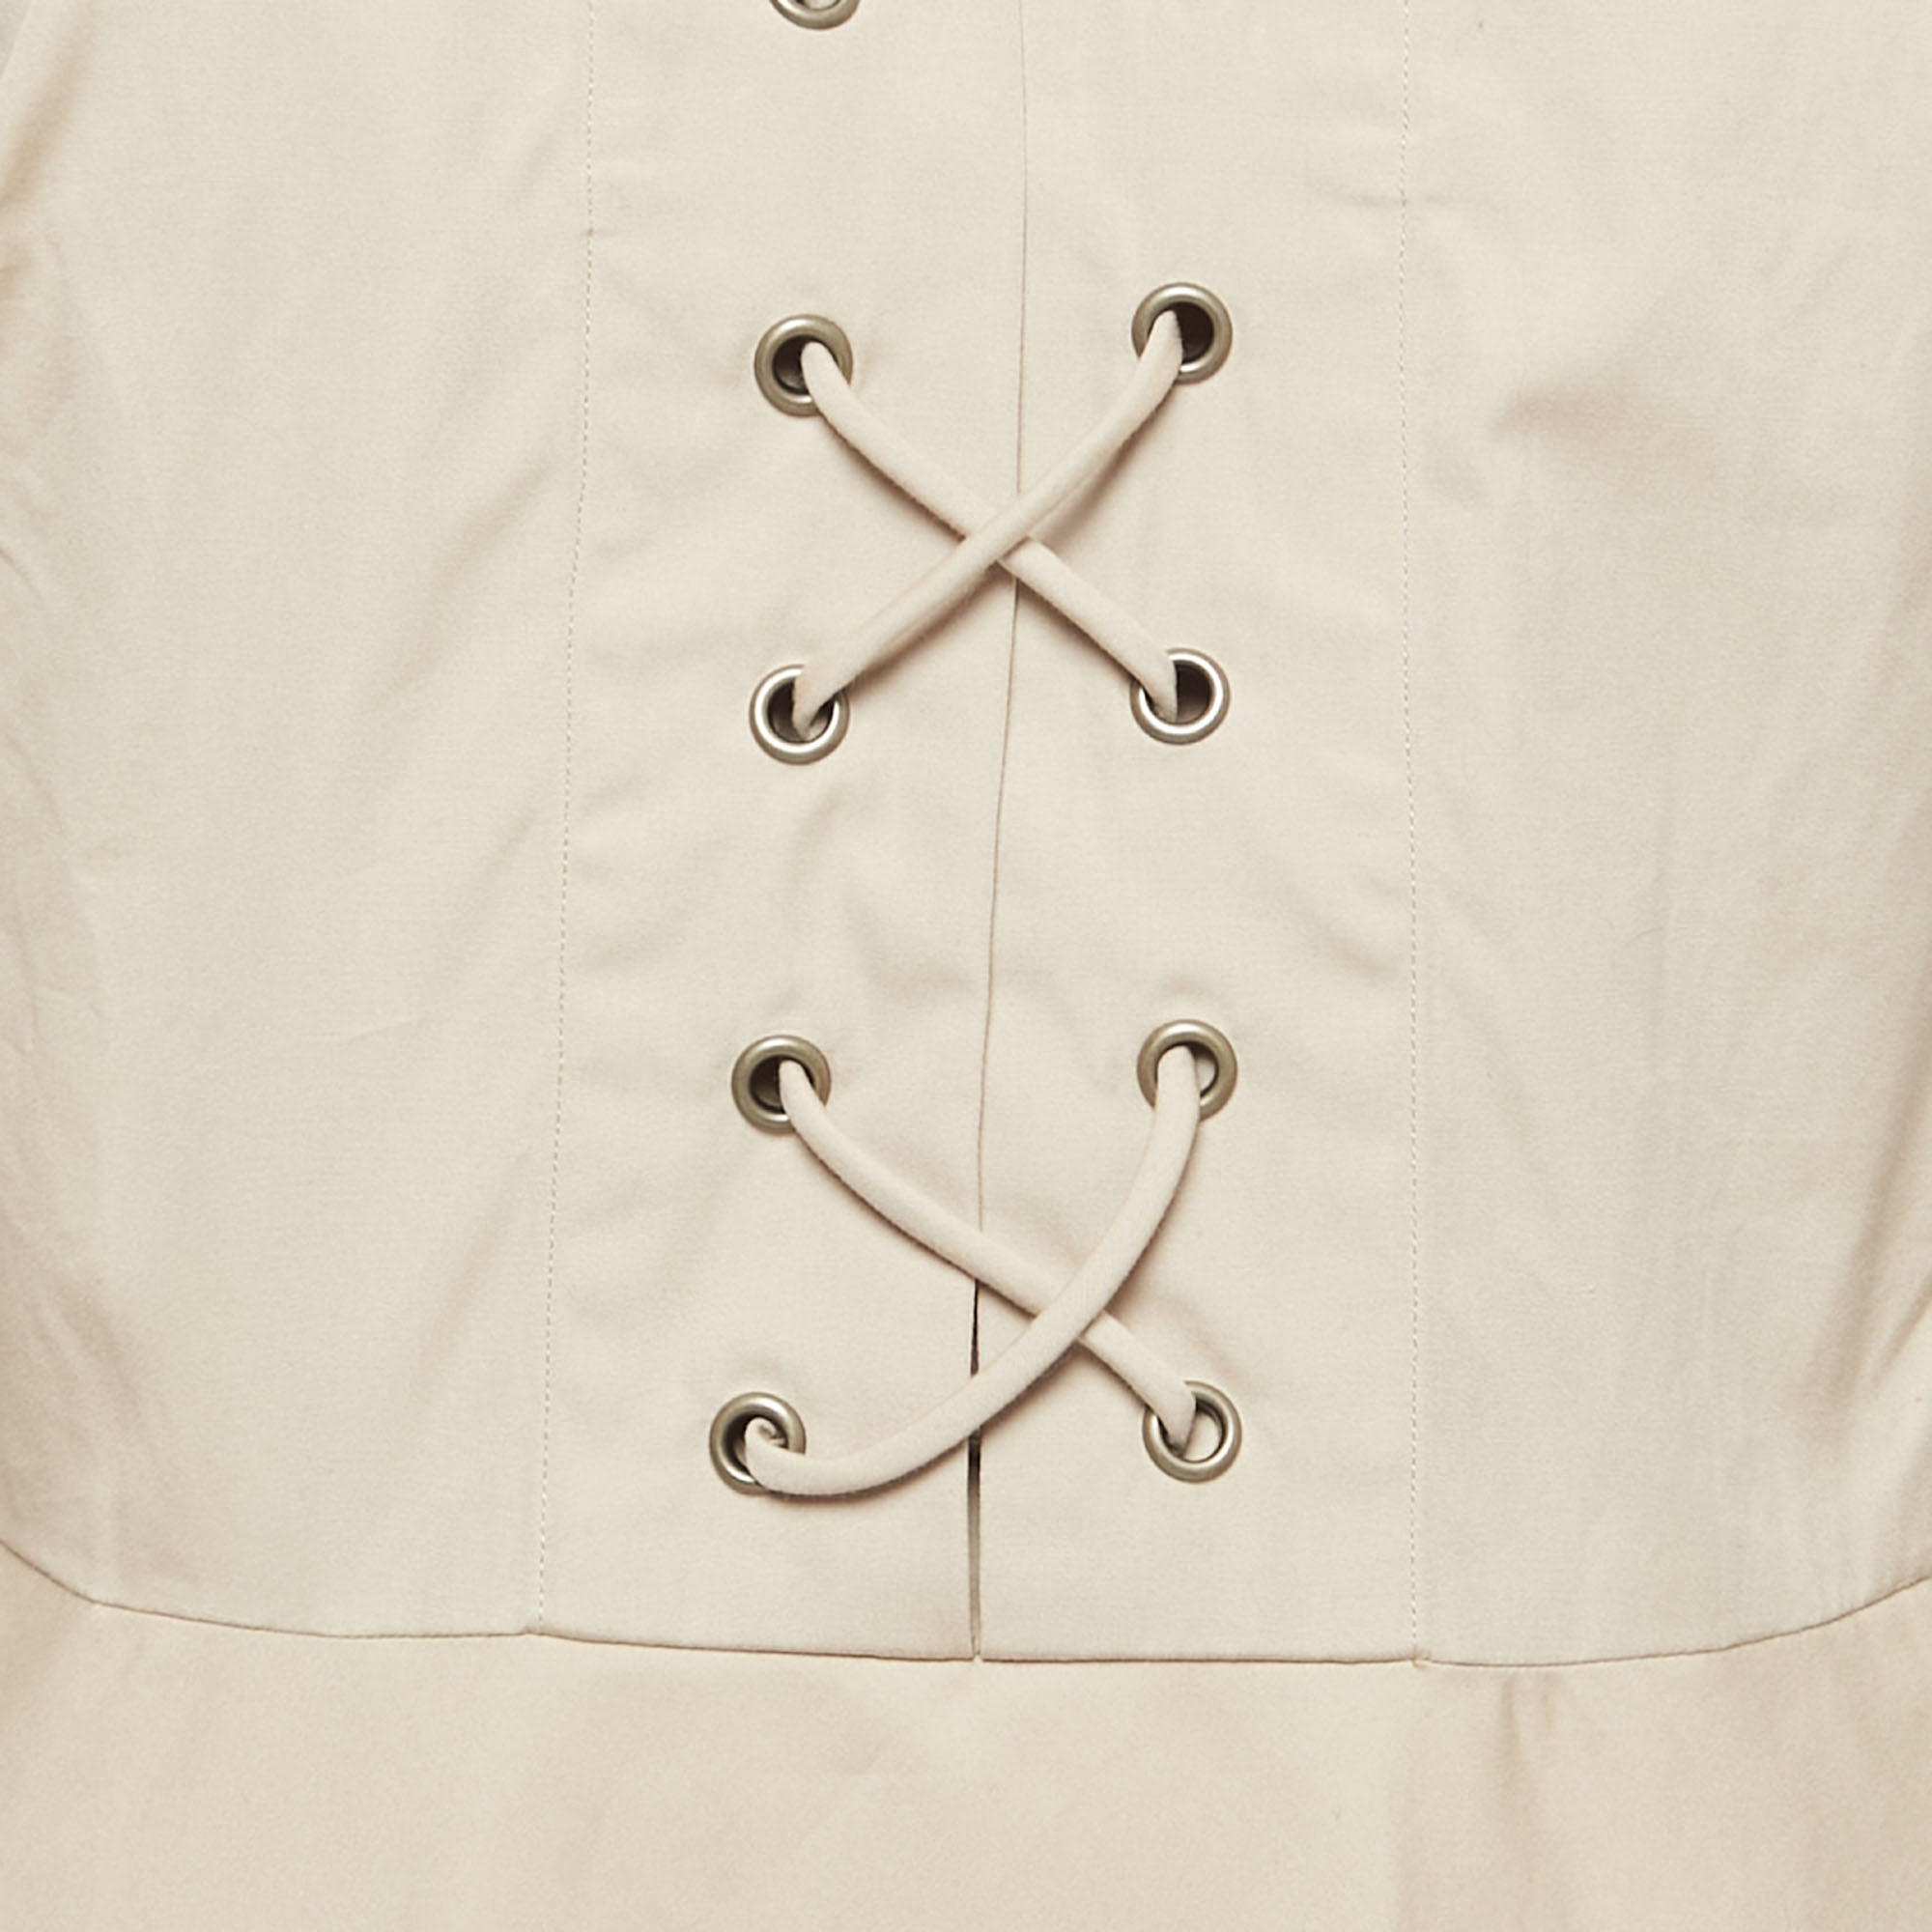 Polo Ralph Lauren Beige Cotton Long Sleeve Midi Dress S